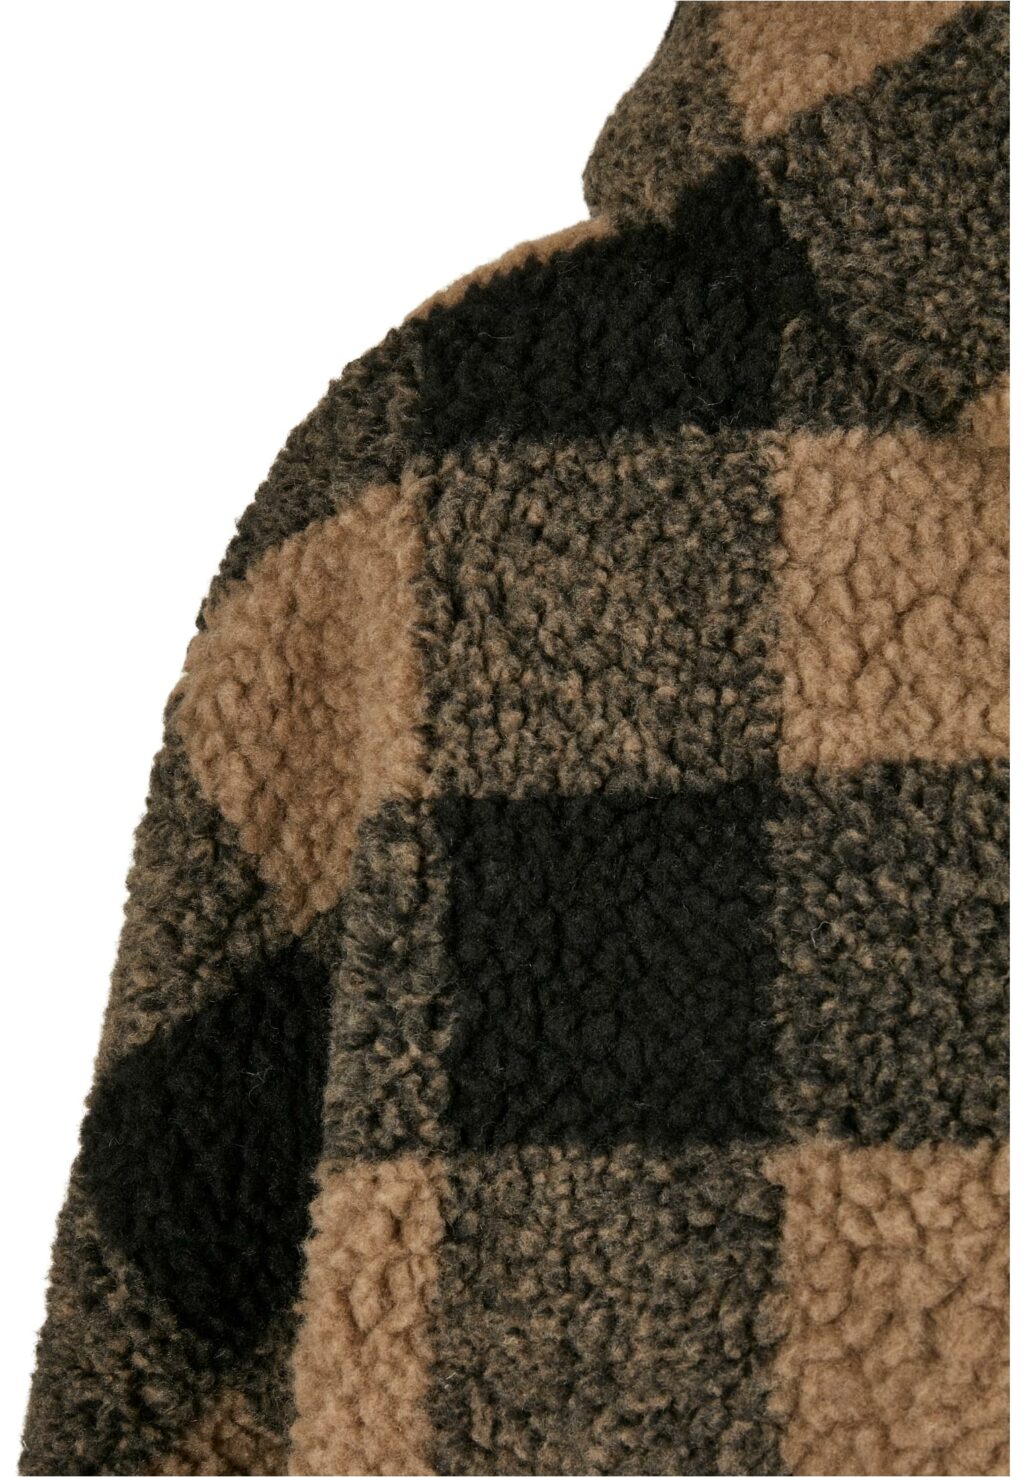 Urban Classics Ladies Hooded Oversized Check Sherpa Jacket softtaupe/black TB3056